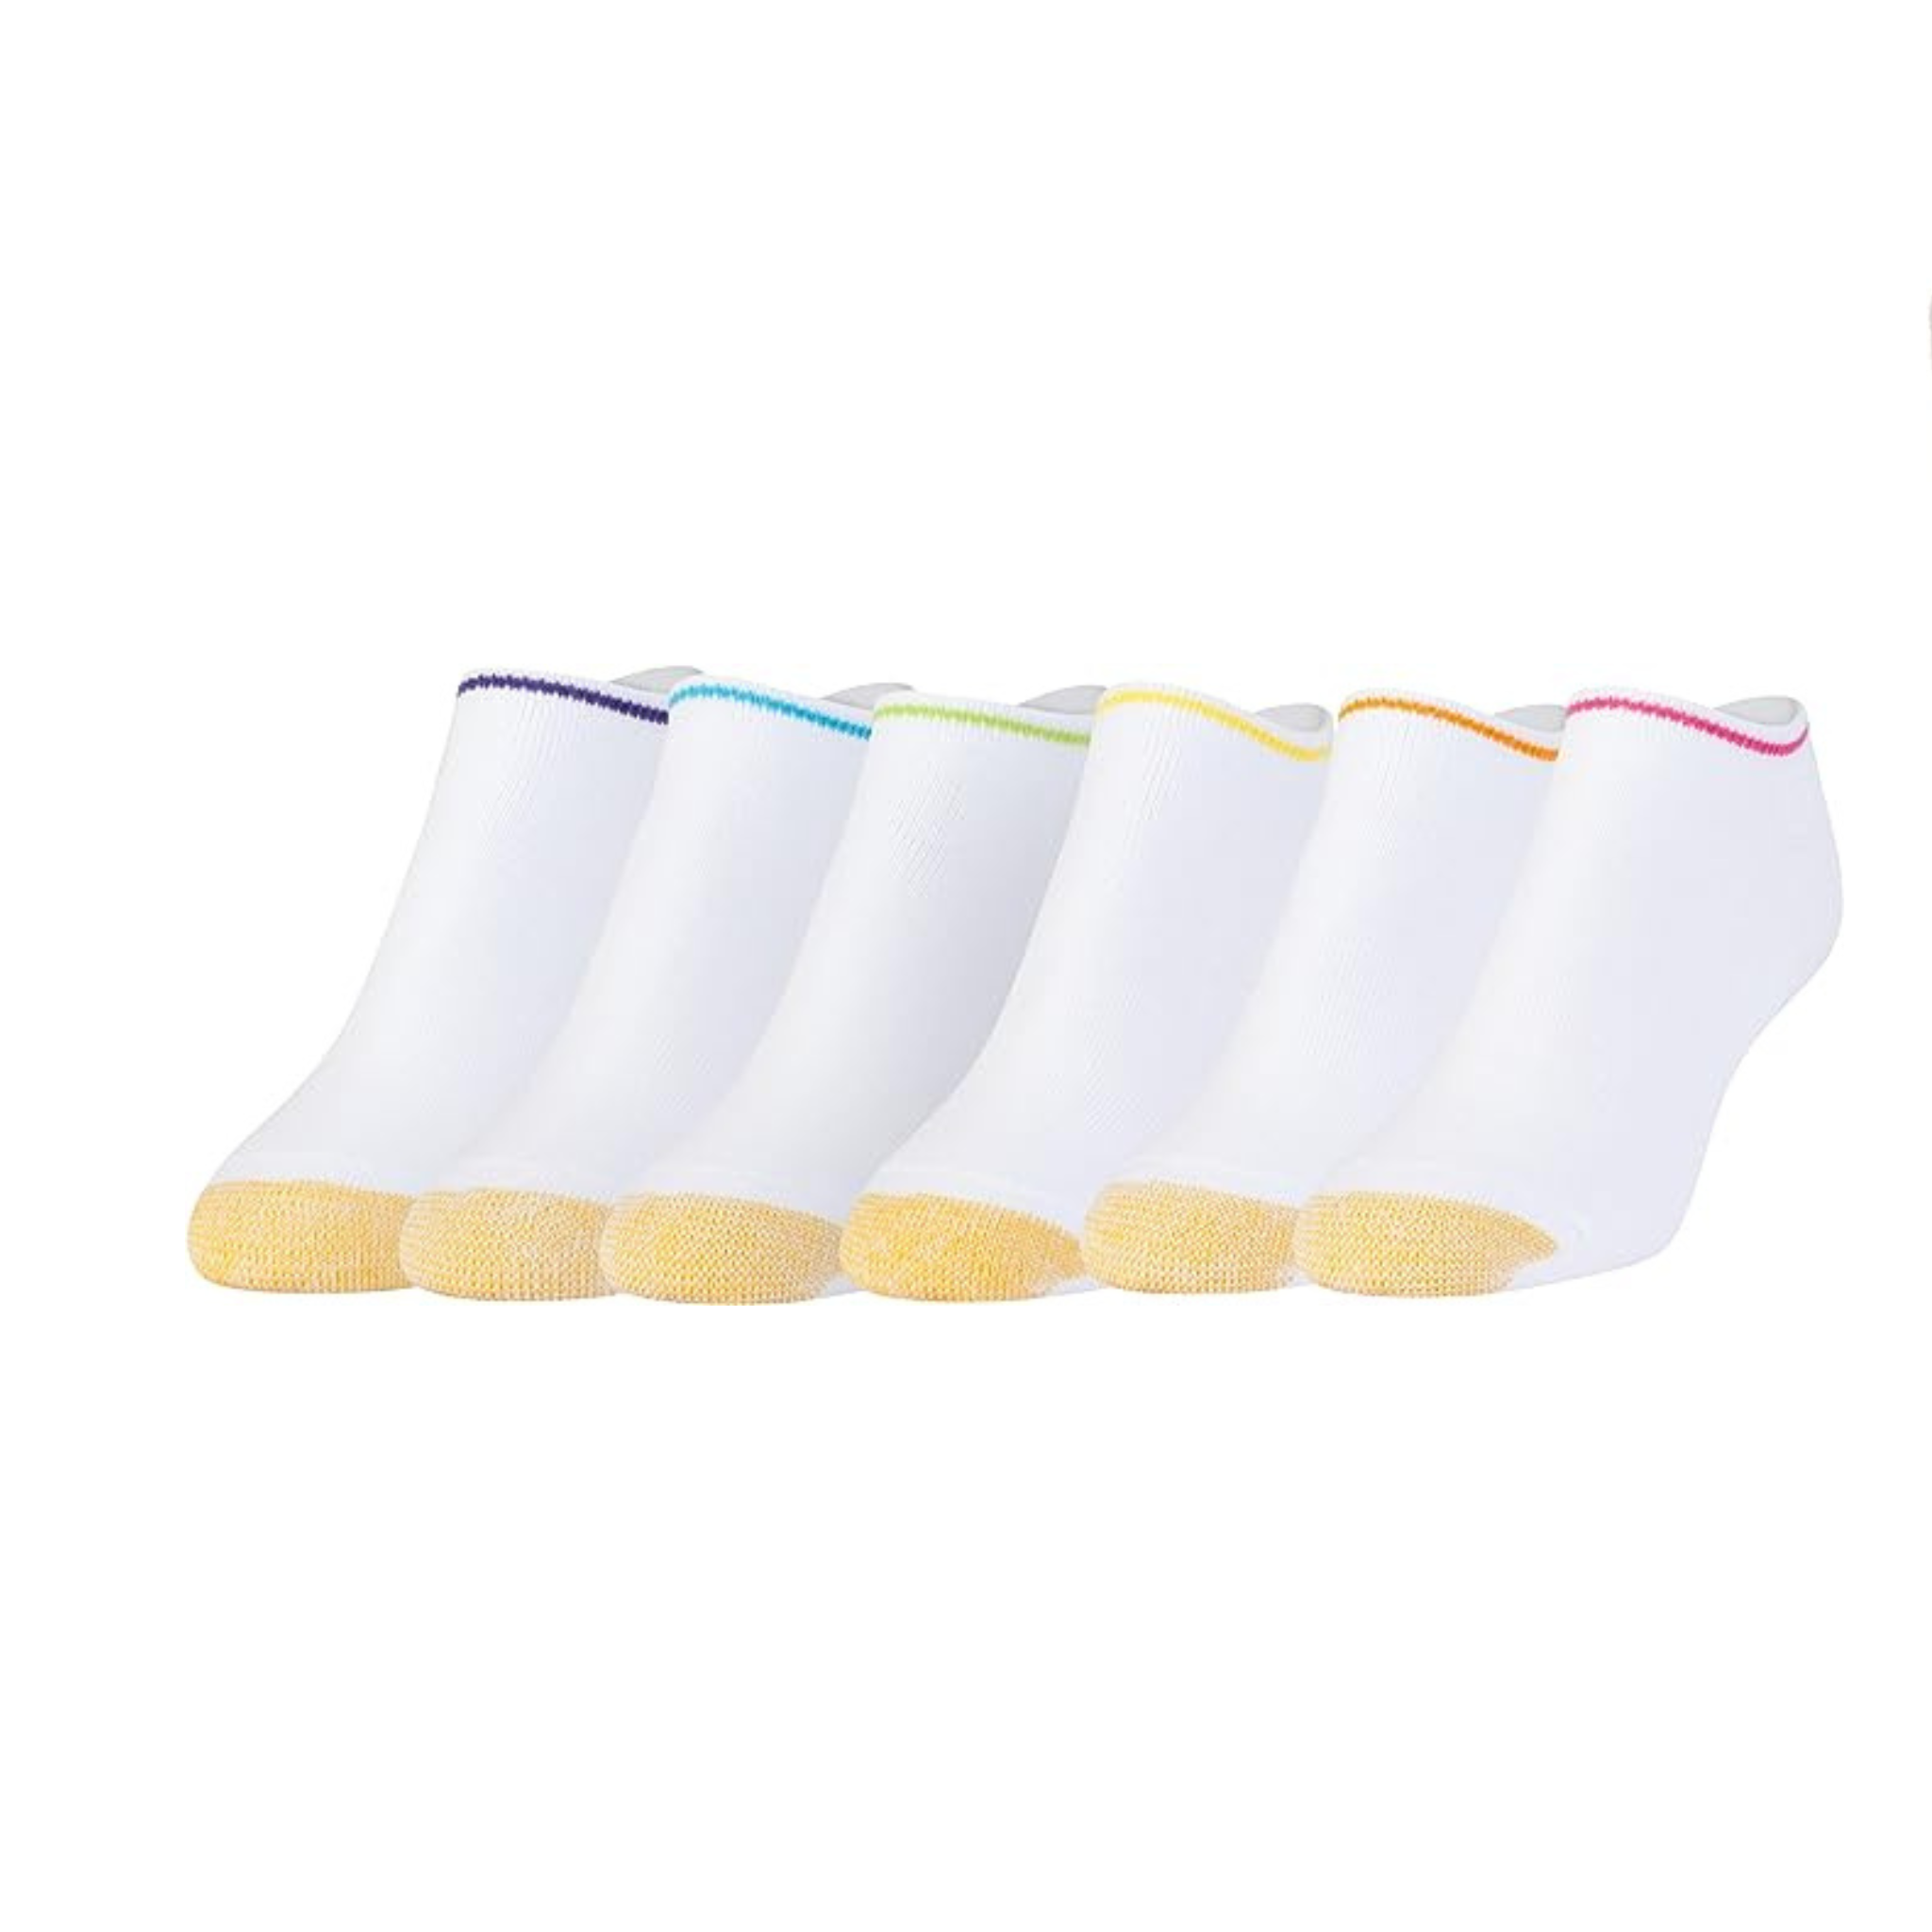 6 Pairs of GoldToe Women’s Liner Socks